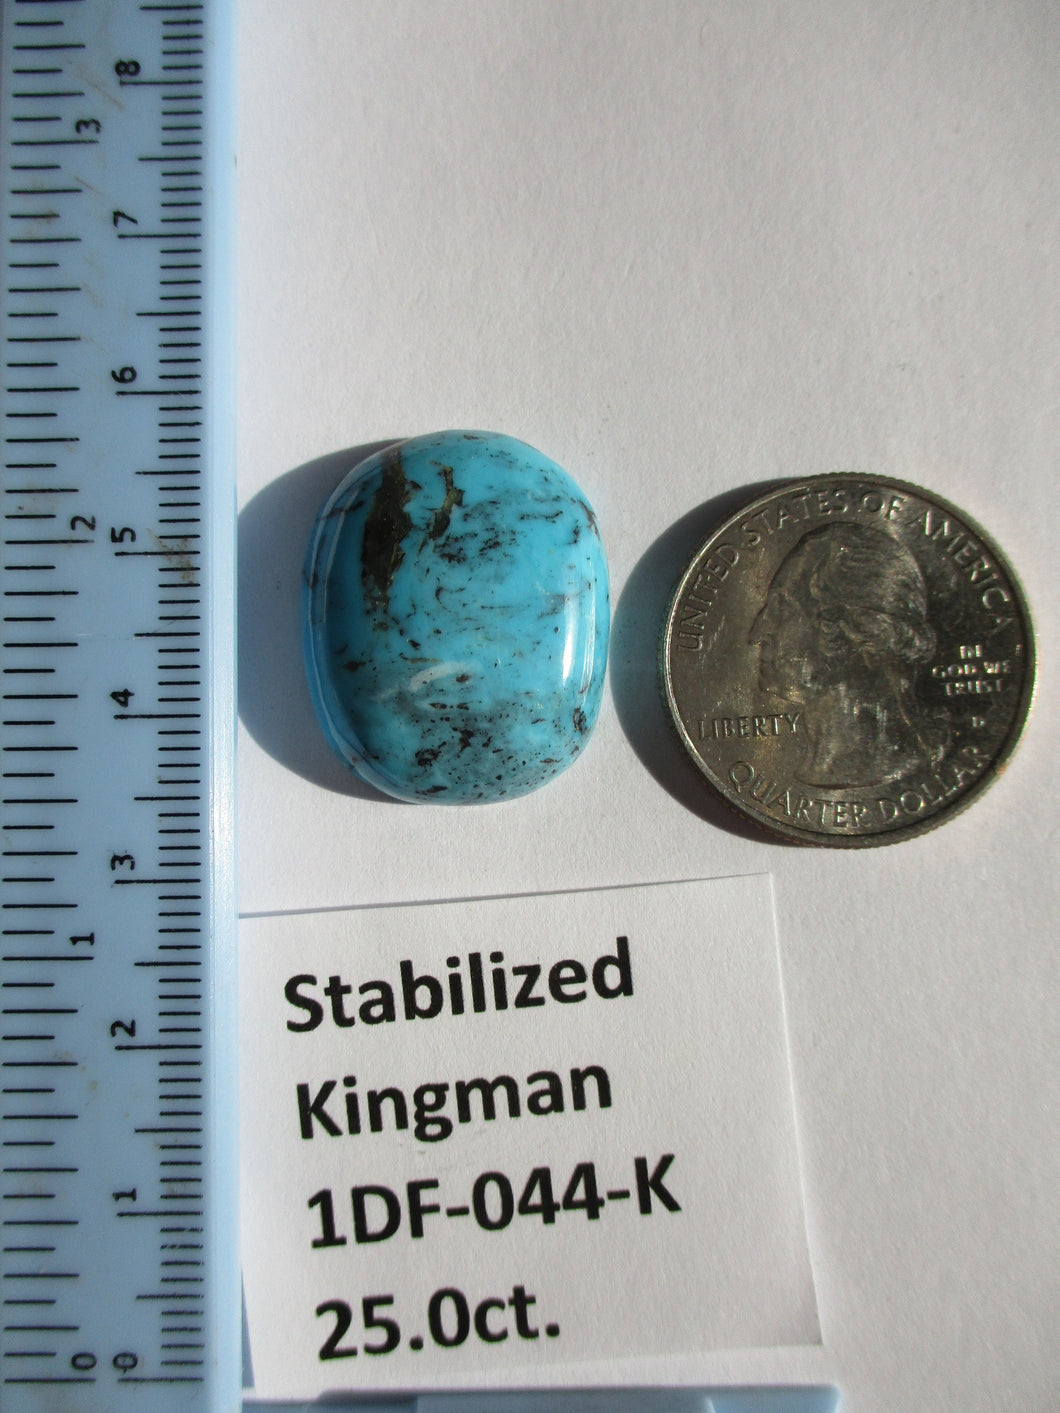 25.0ct. (24.5x20x7mm) Stabilized Kingman Turquoise Cabochon Gemstone, 1DF 044